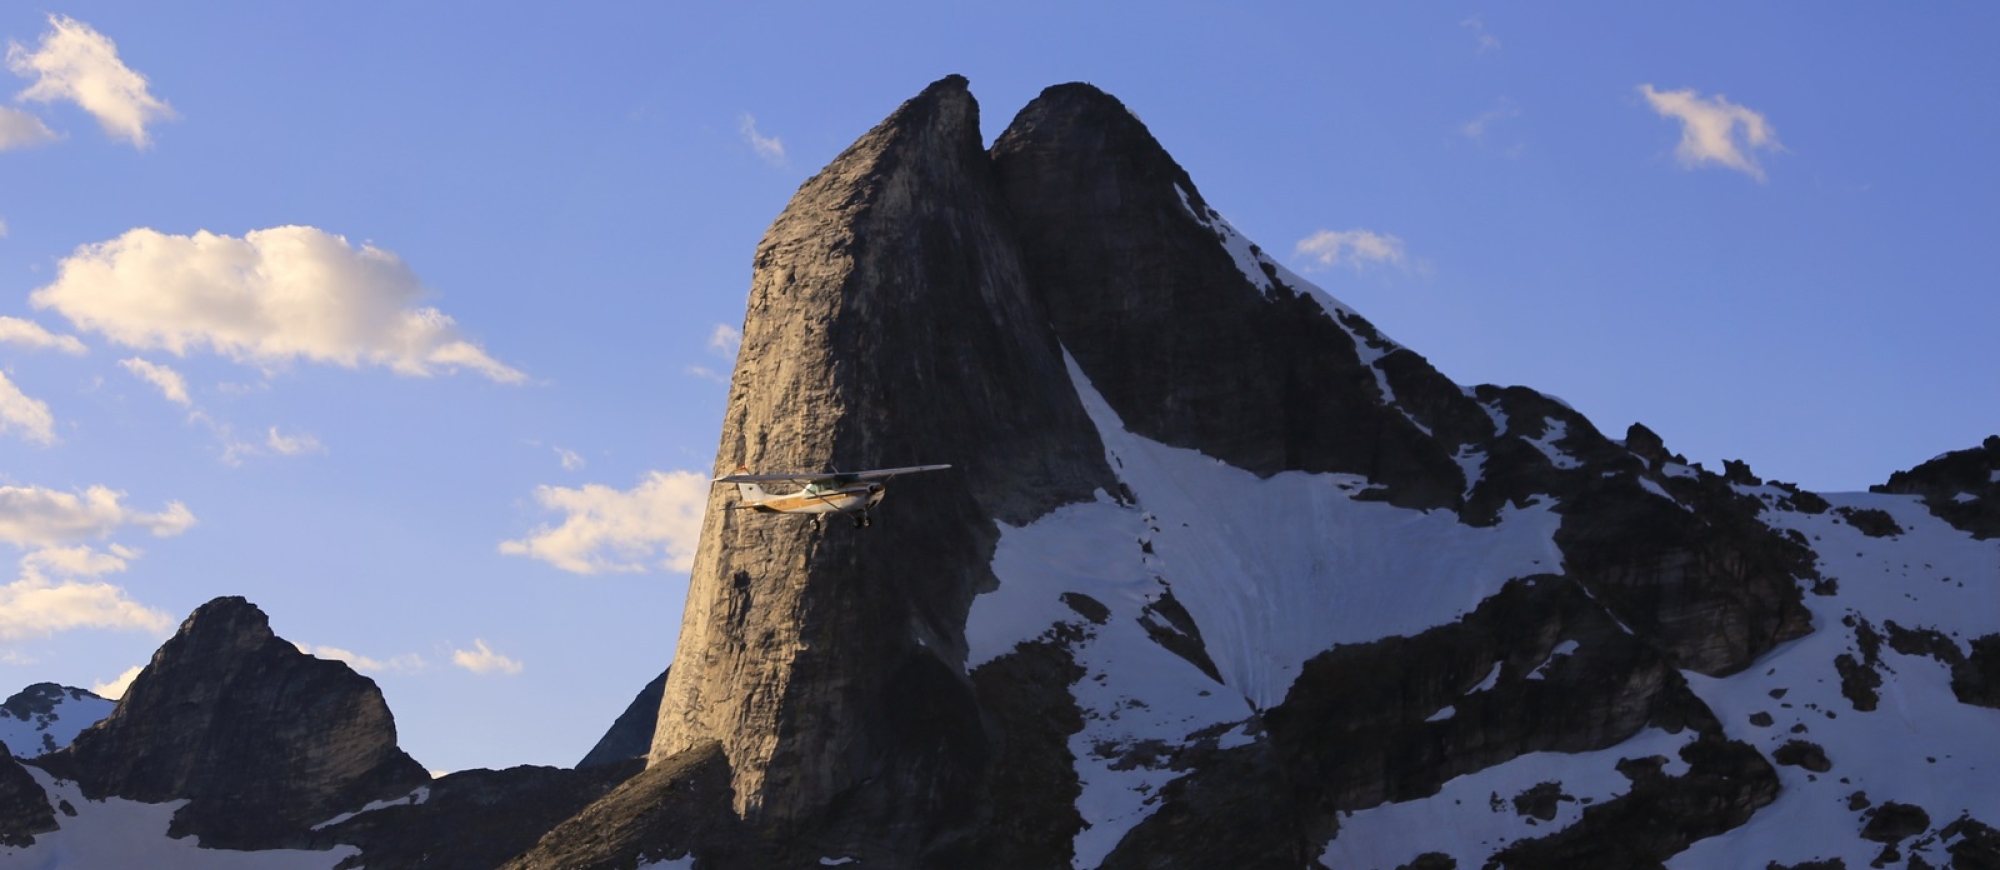 A Kootenay Lake Aviation plane flies near a large mountain